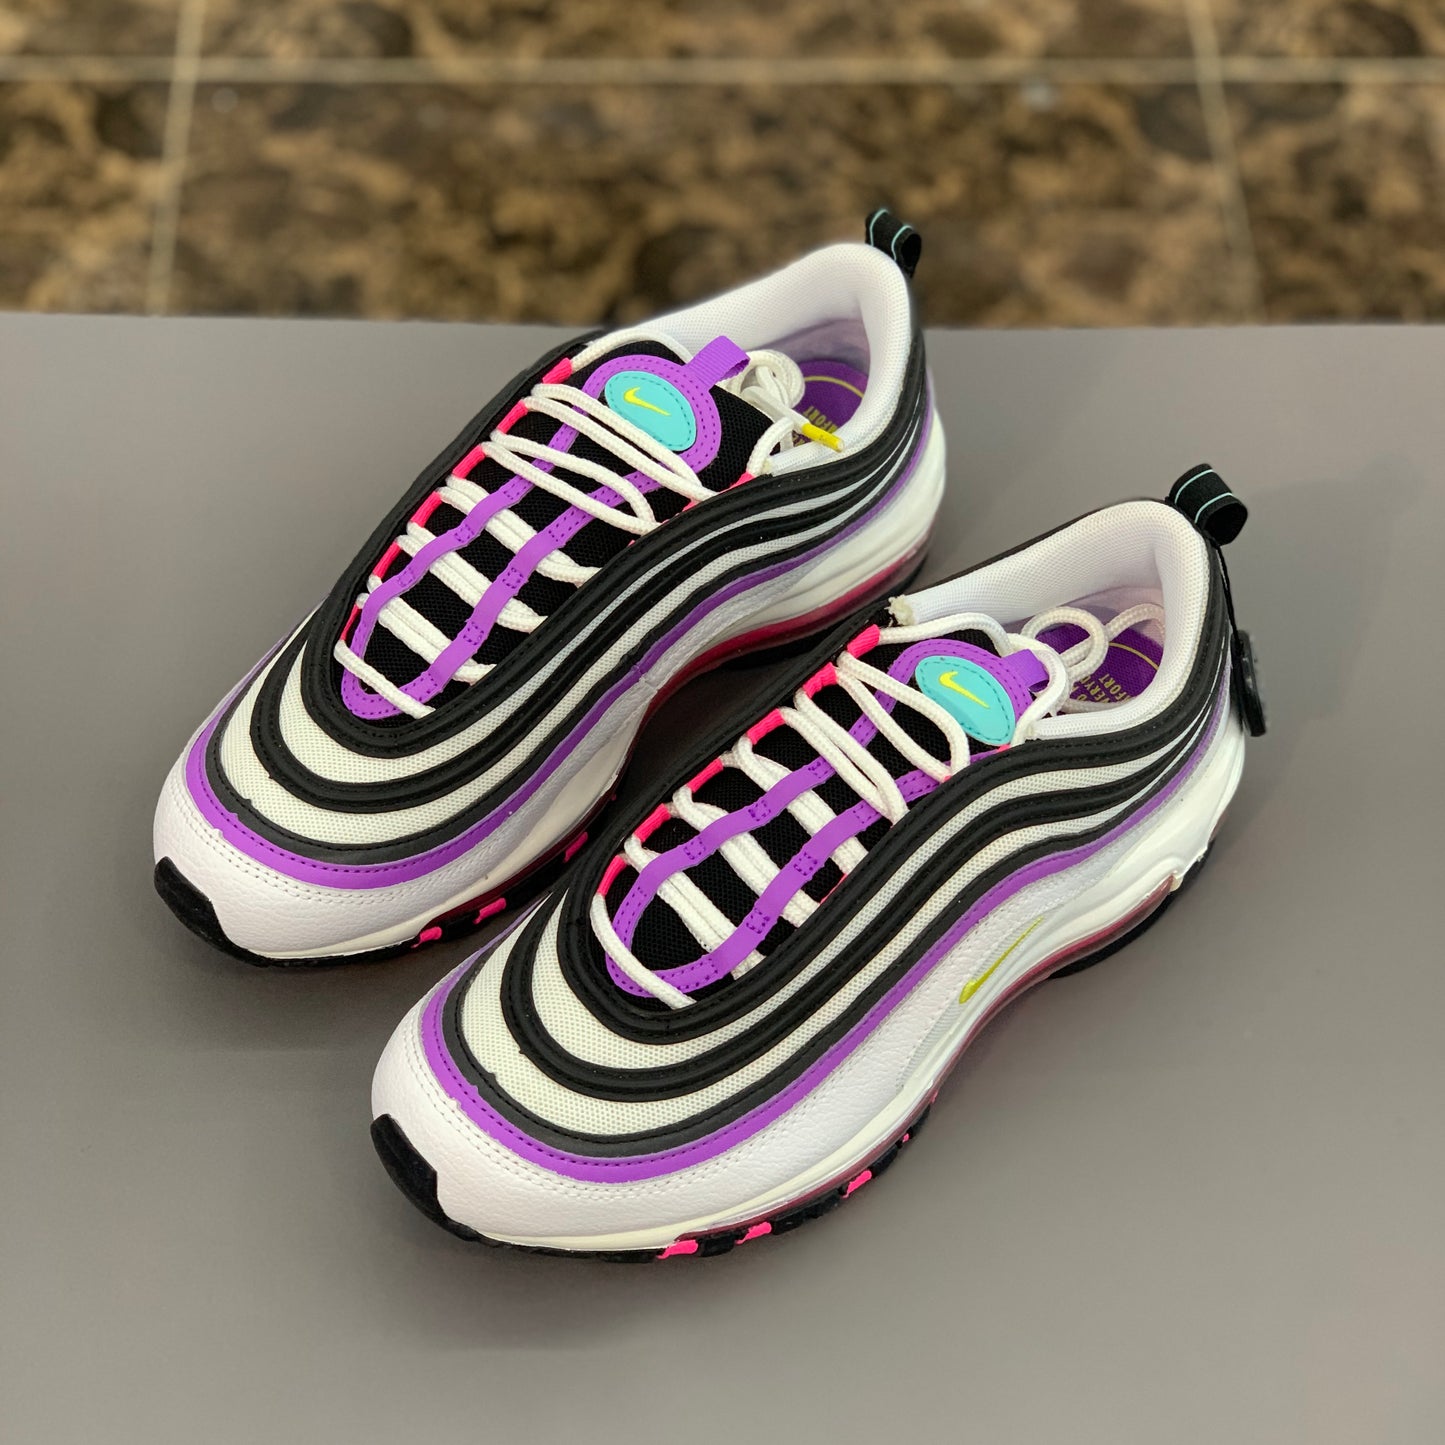 Nike Air Max 97 Bright Violet